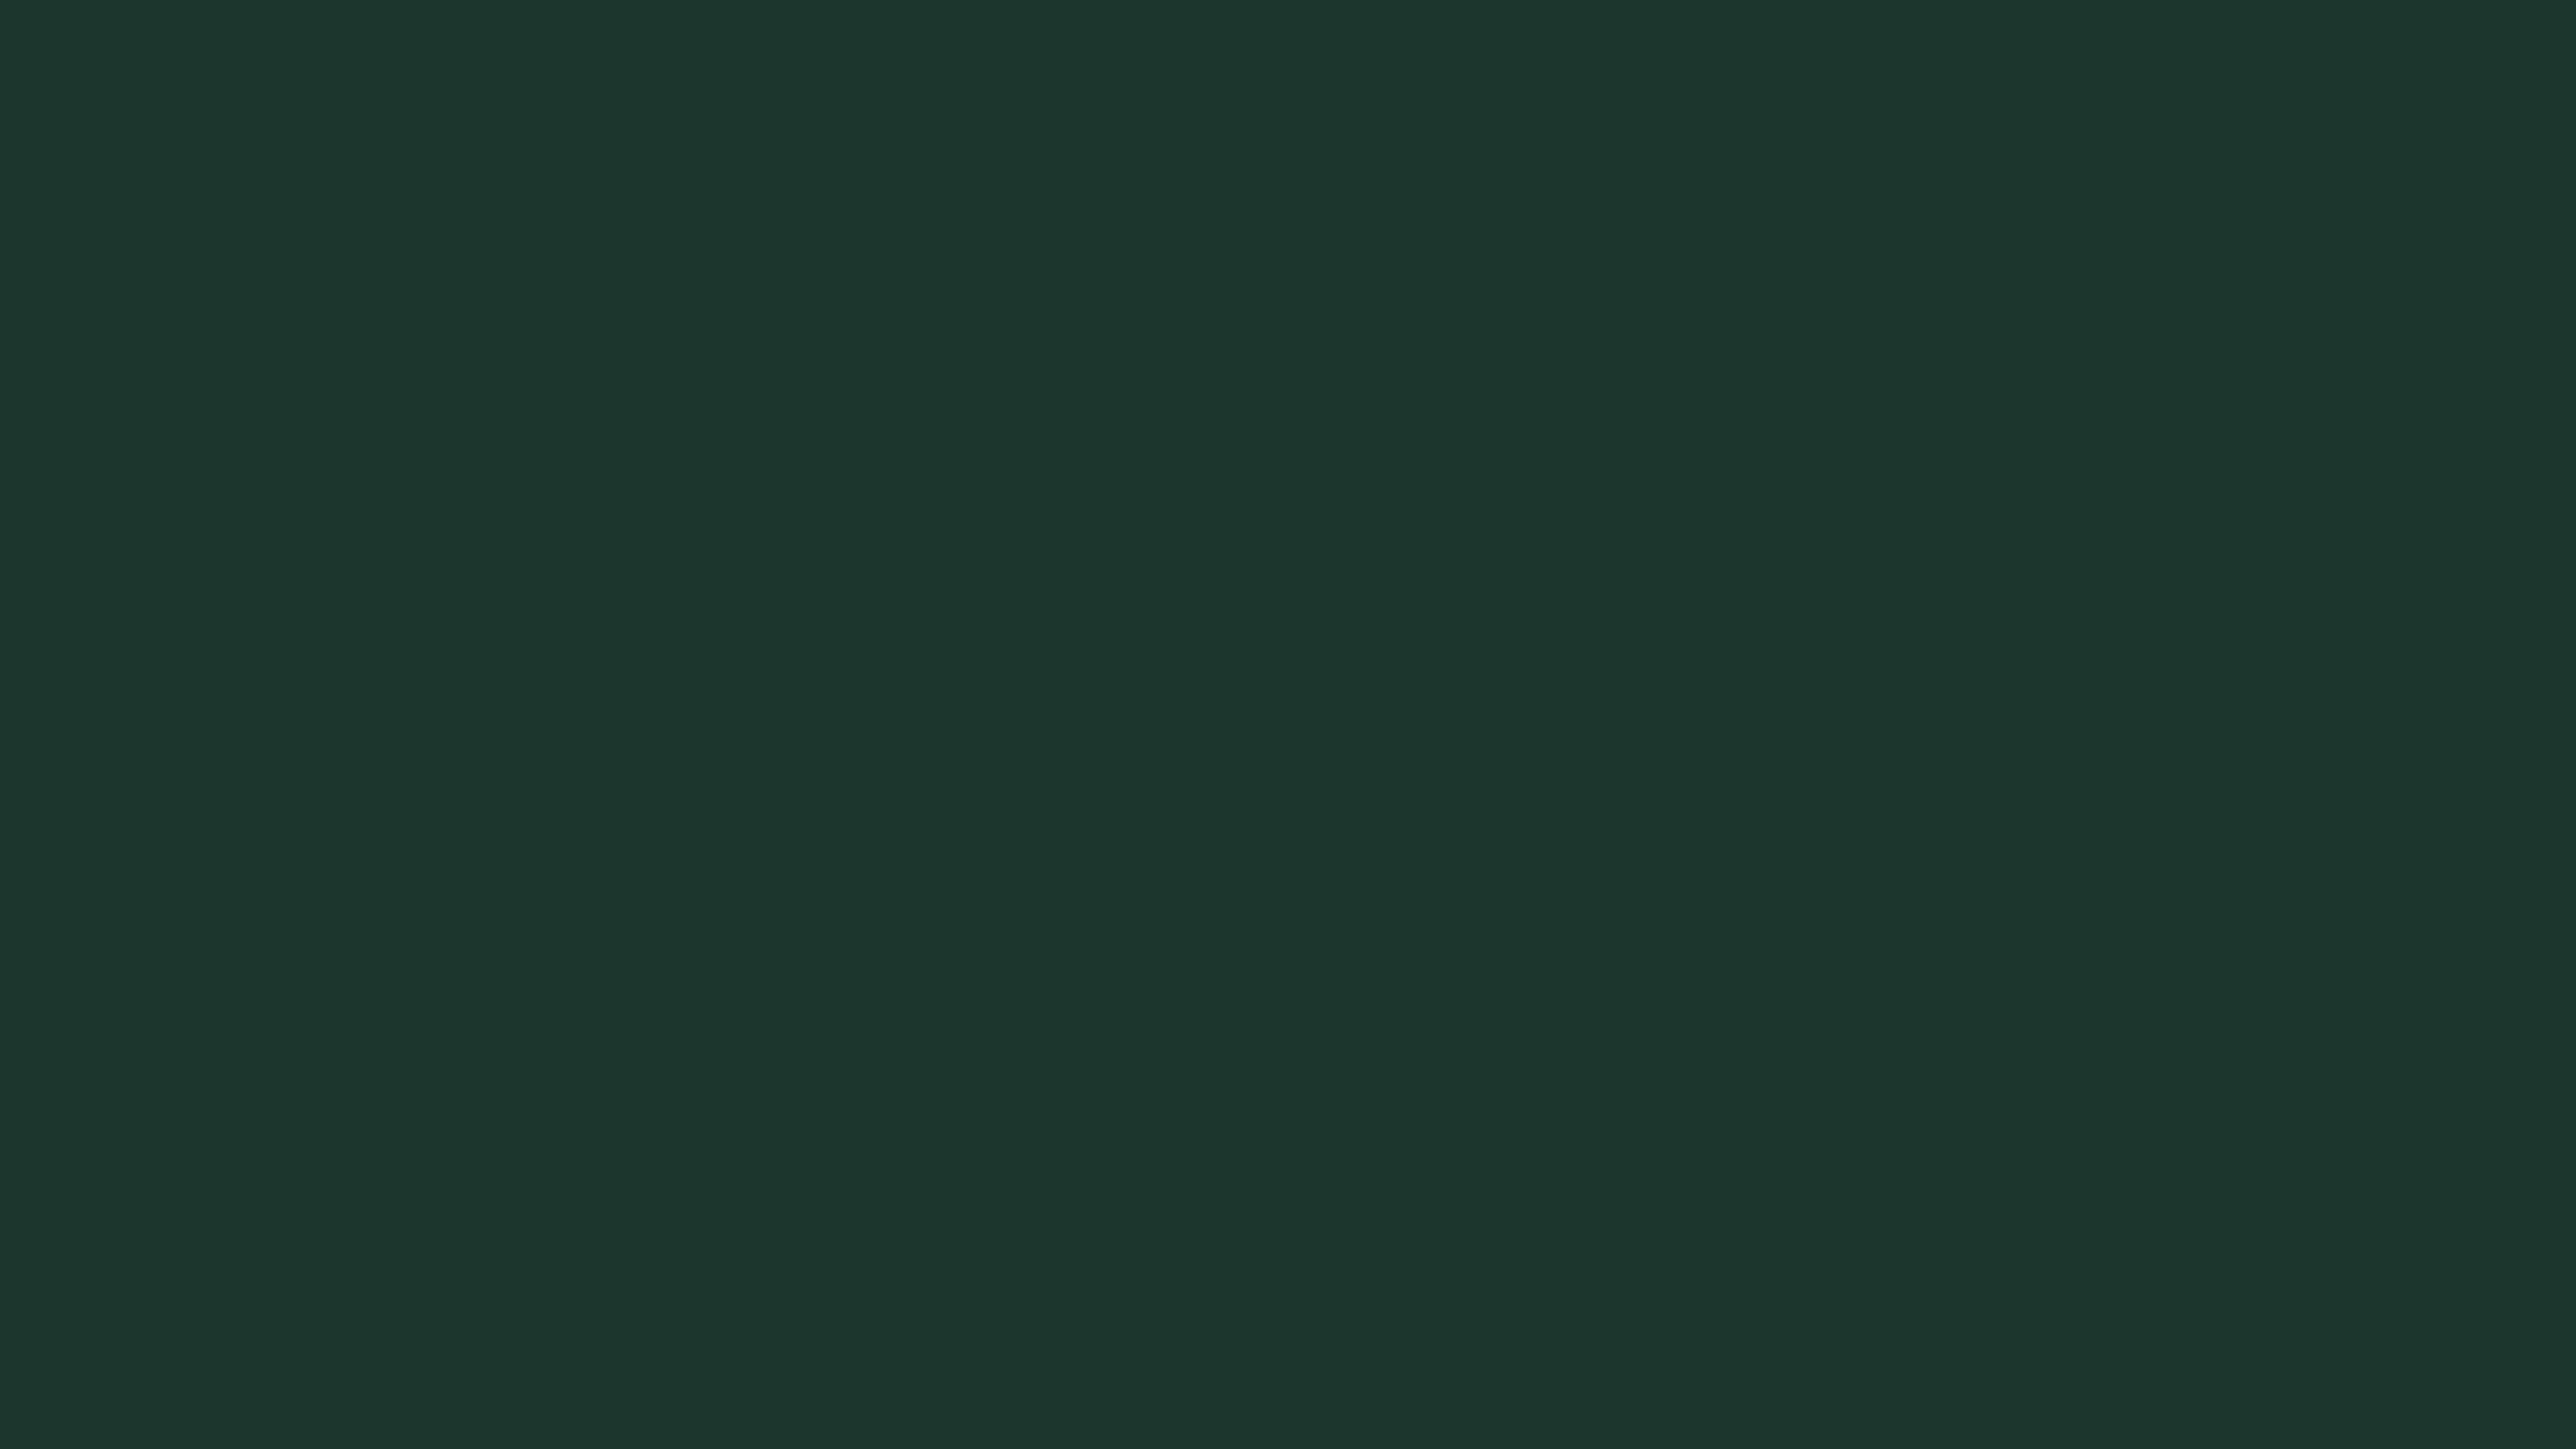 5120x2880 Medium Jungle Green Solid Color Background